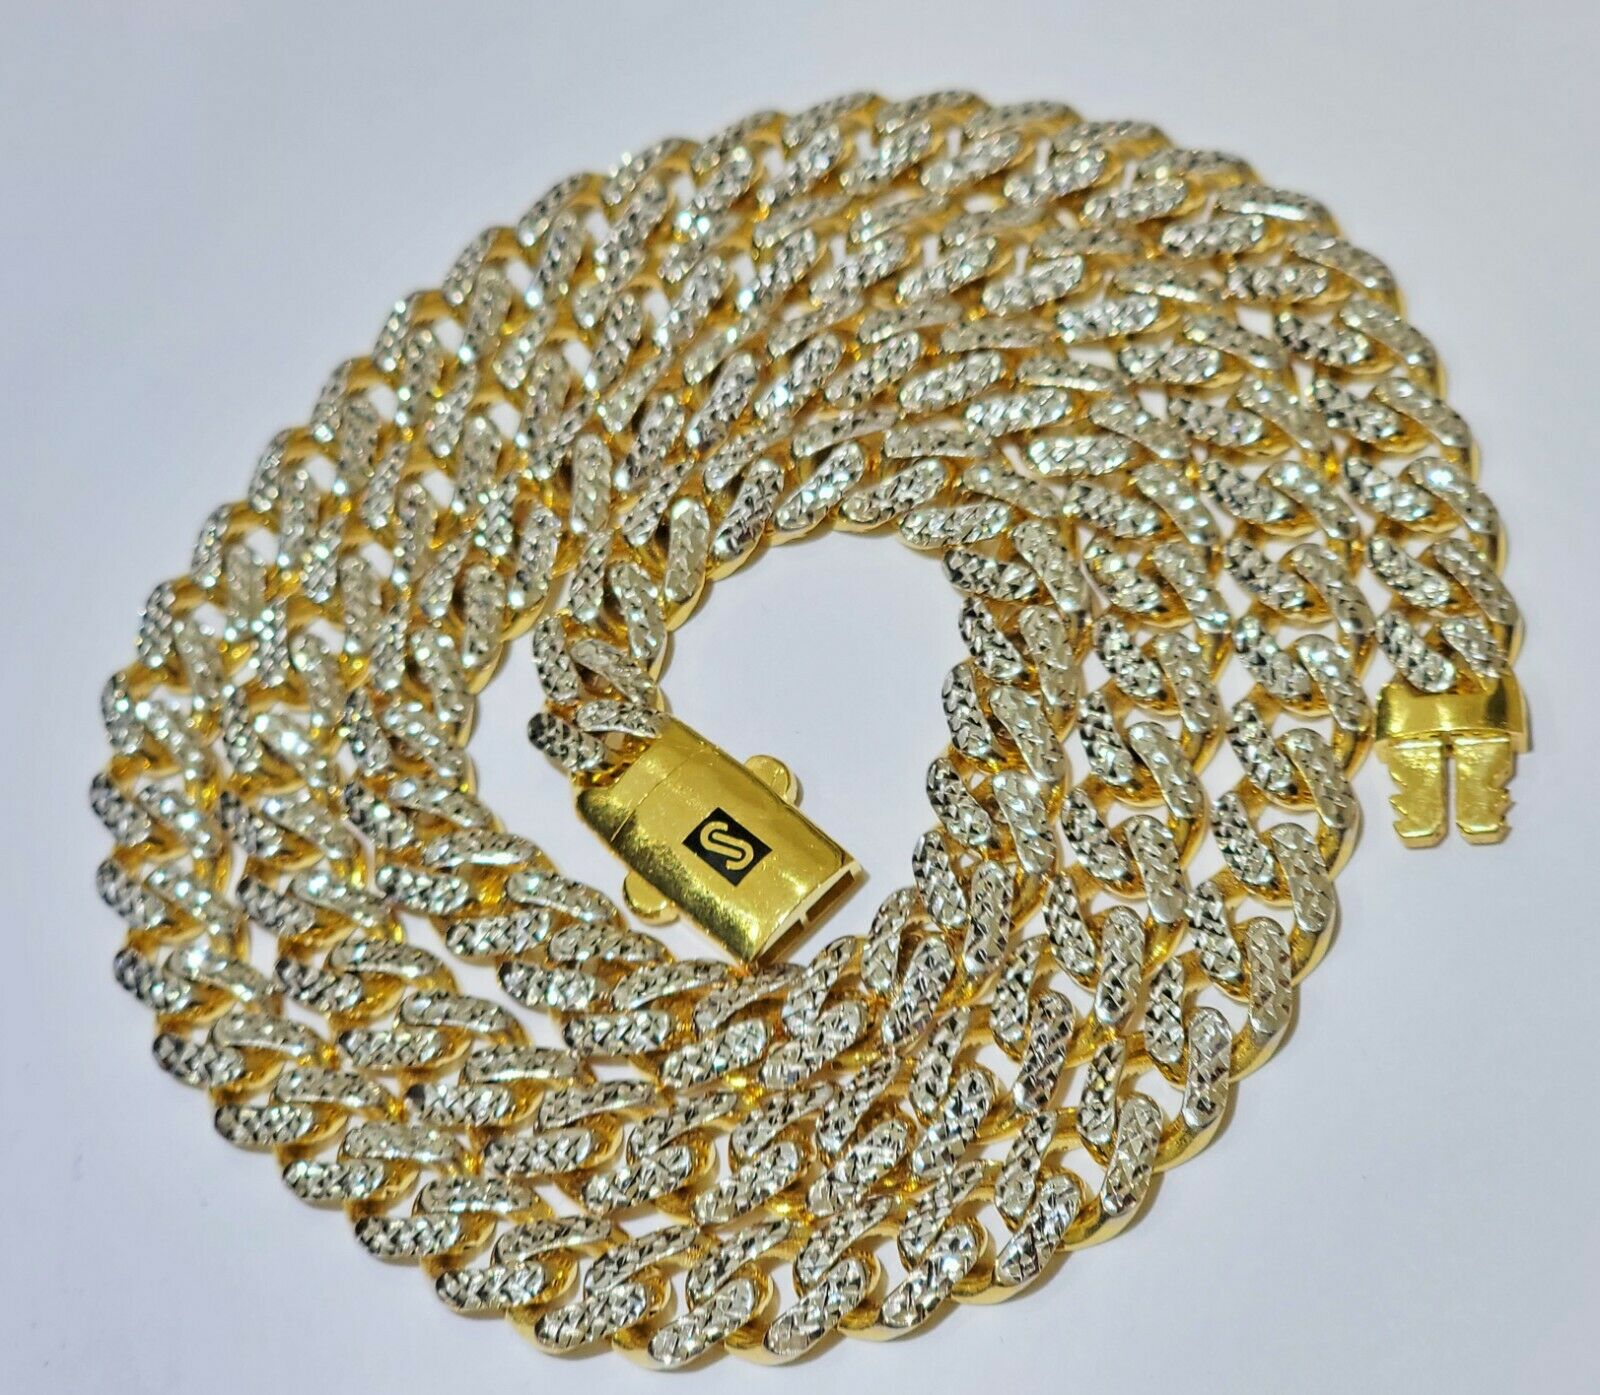 10k Gold Monaco Chain Necklace 7mm 24